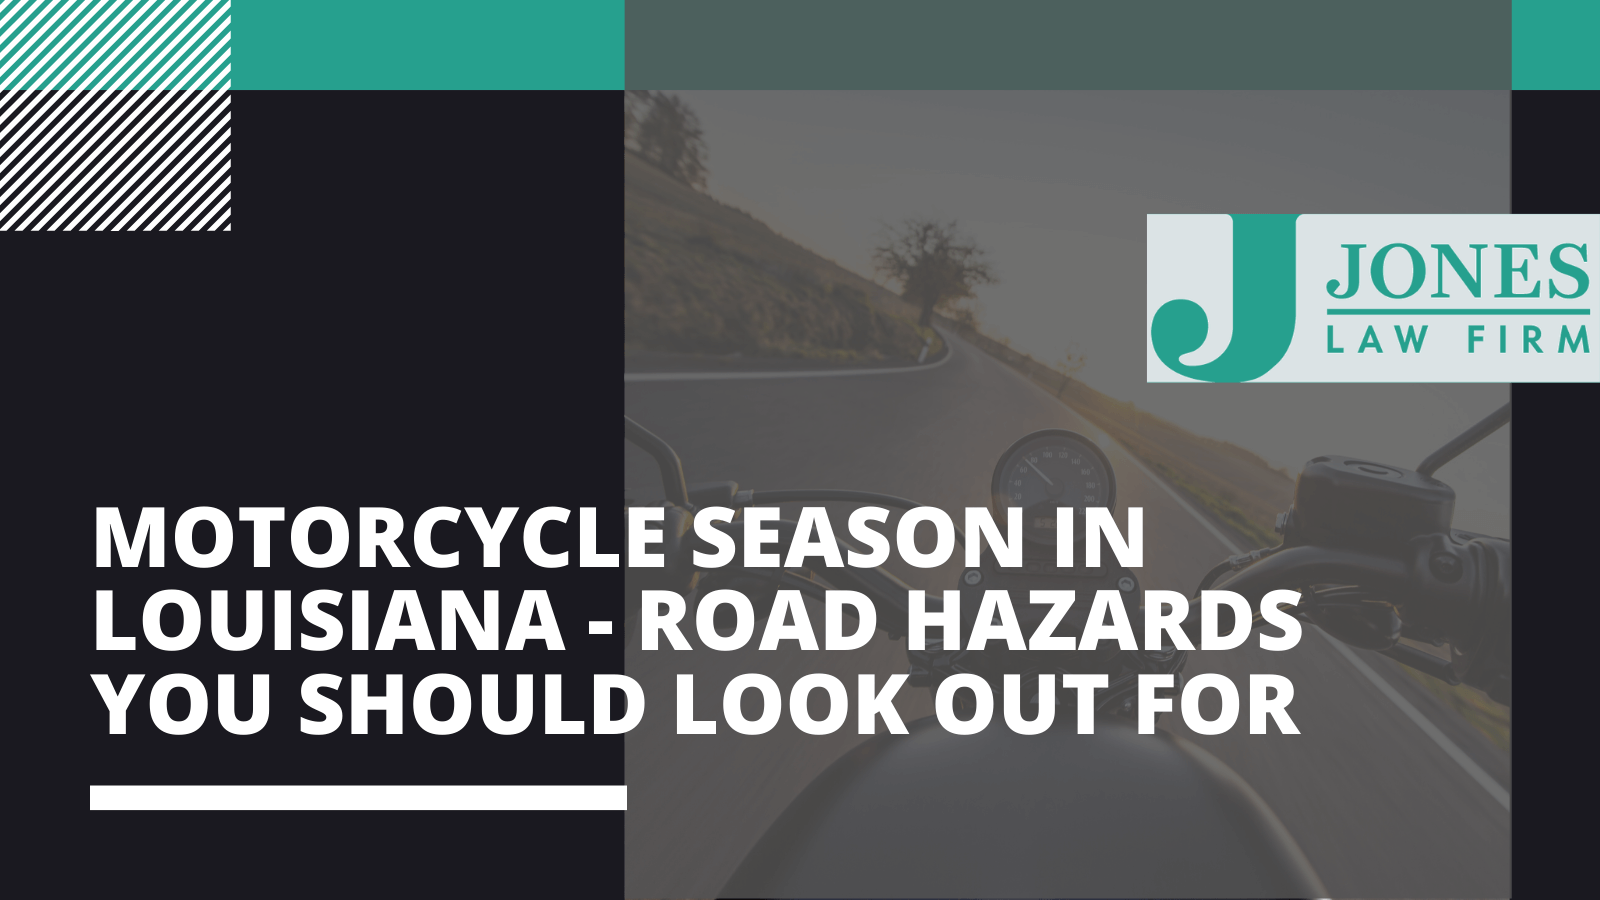 Motorcycle Season in Louisiana - Road Hazards You Should Look Out For - Jones law firm - Alexandria louisiana